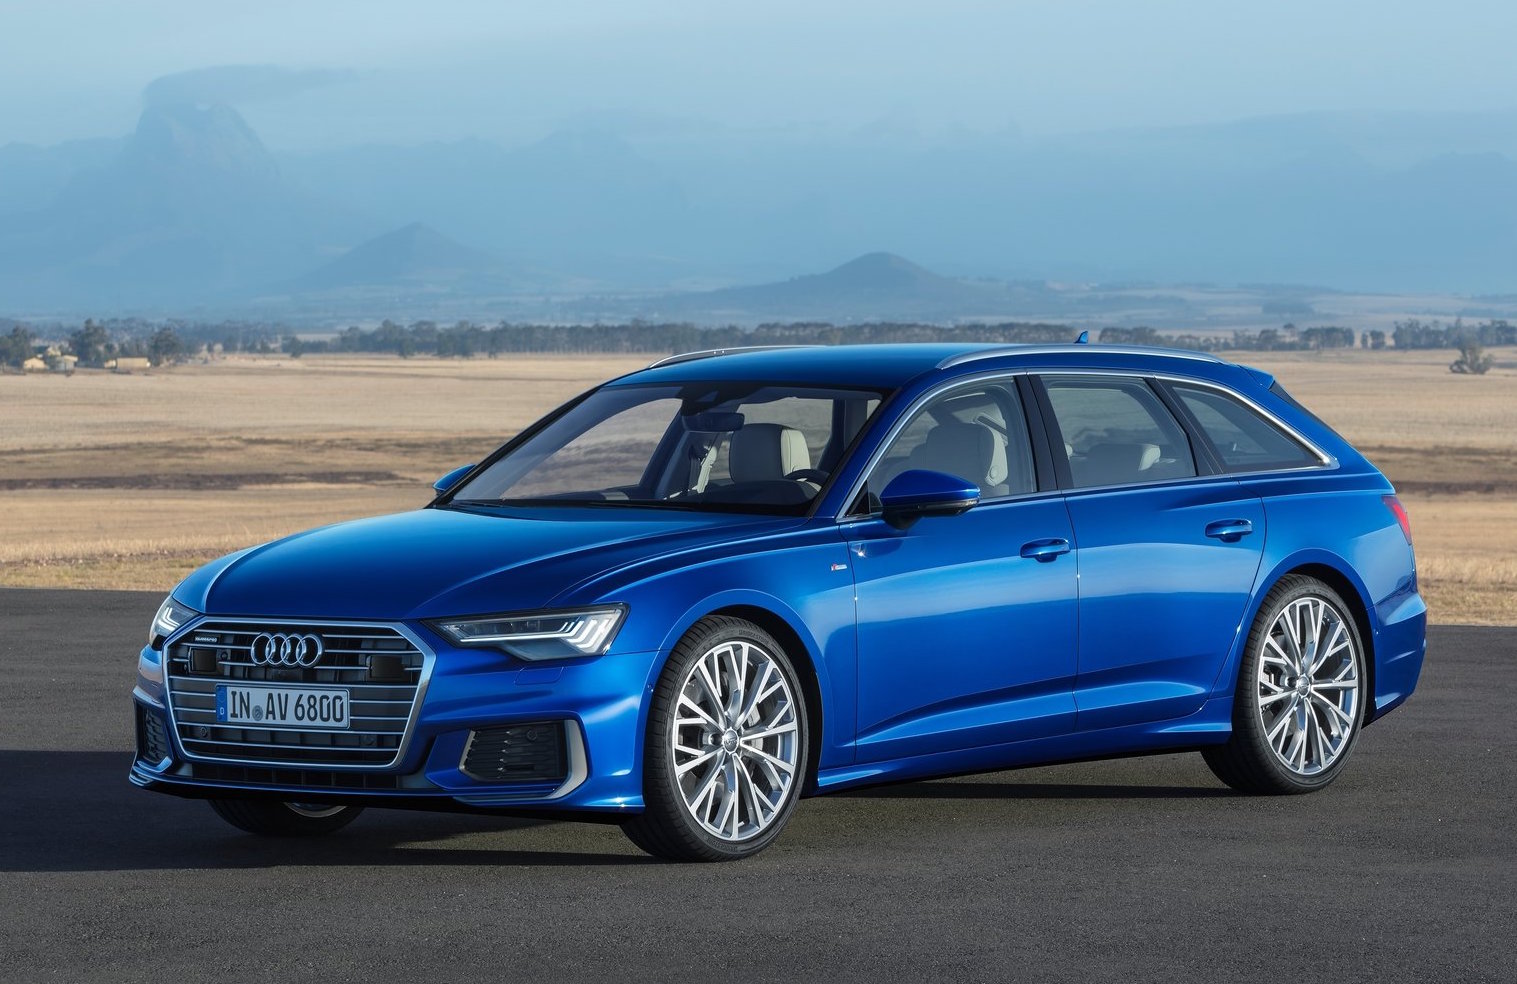 2019 Audi A6 Avant revealed, under evaluation for Australia  PerformanceDrive